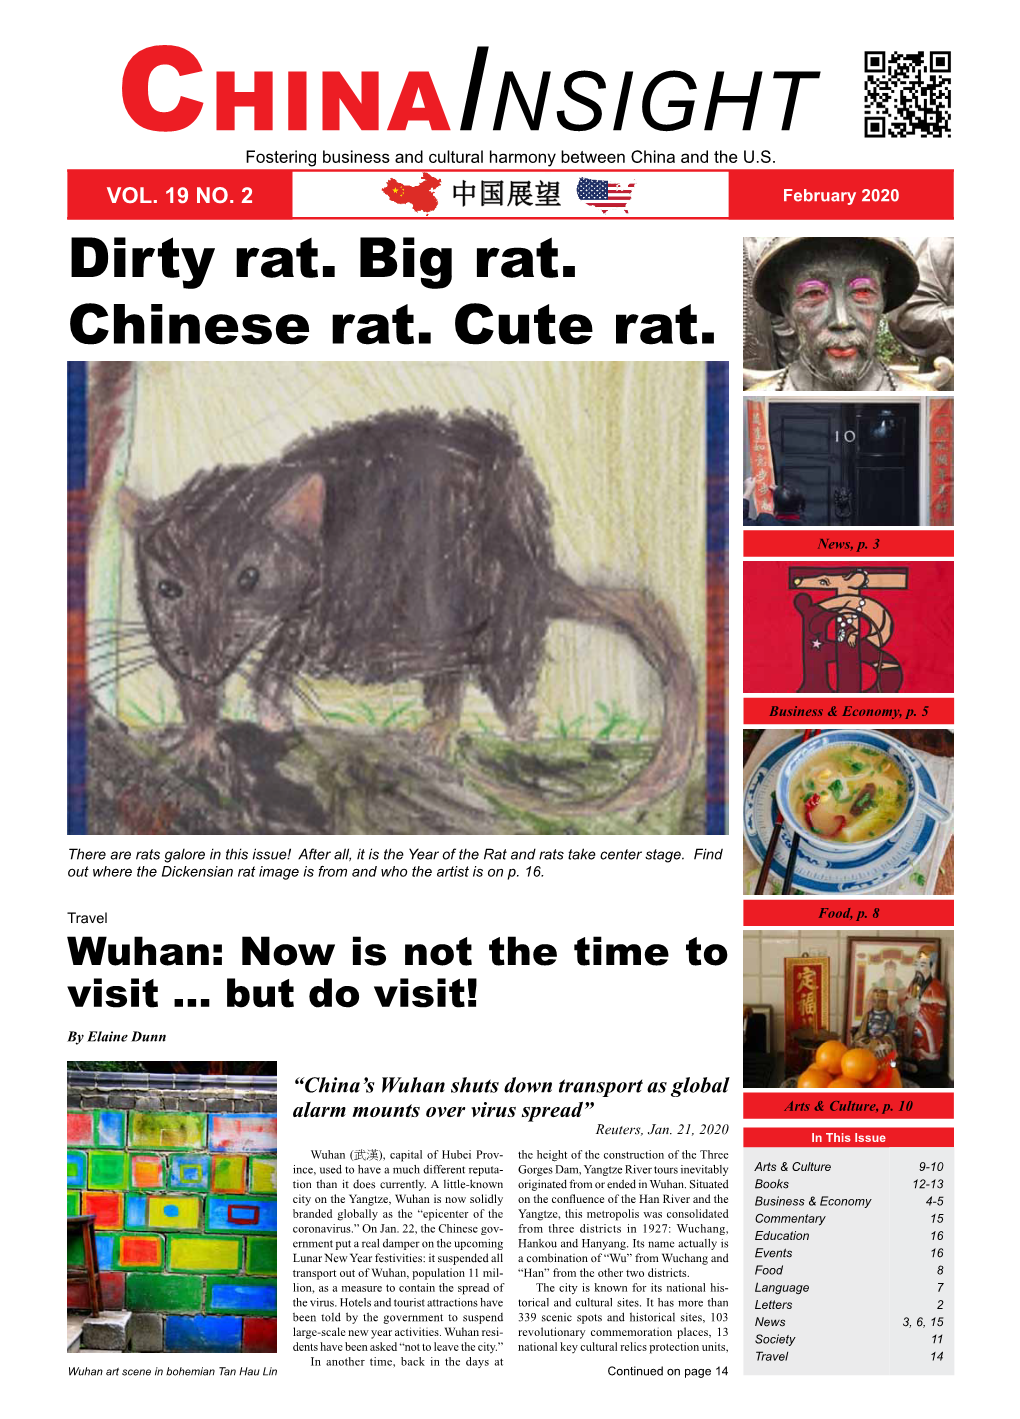 February 2020 Dirty Rat